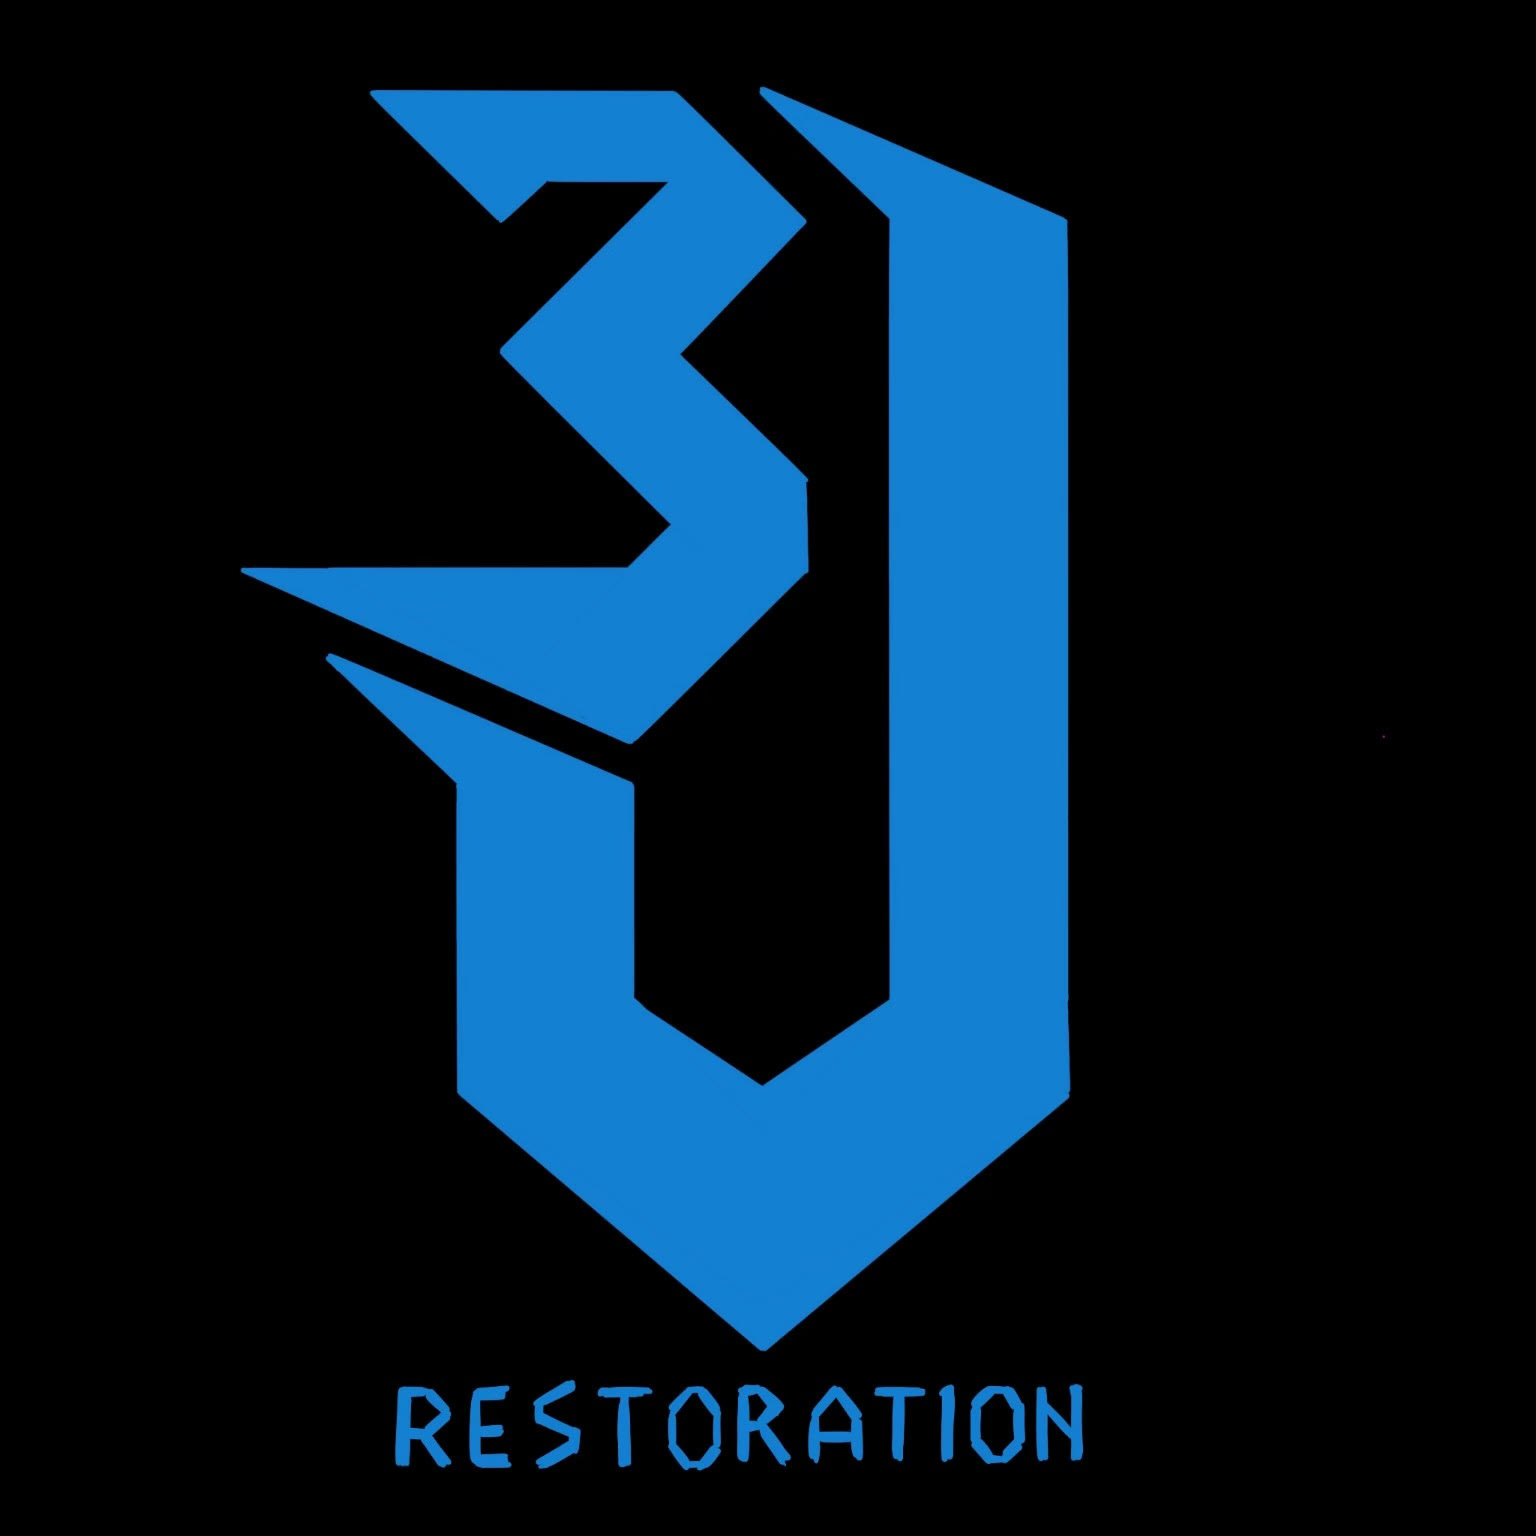 3 J'S Restoration, LLC Logo